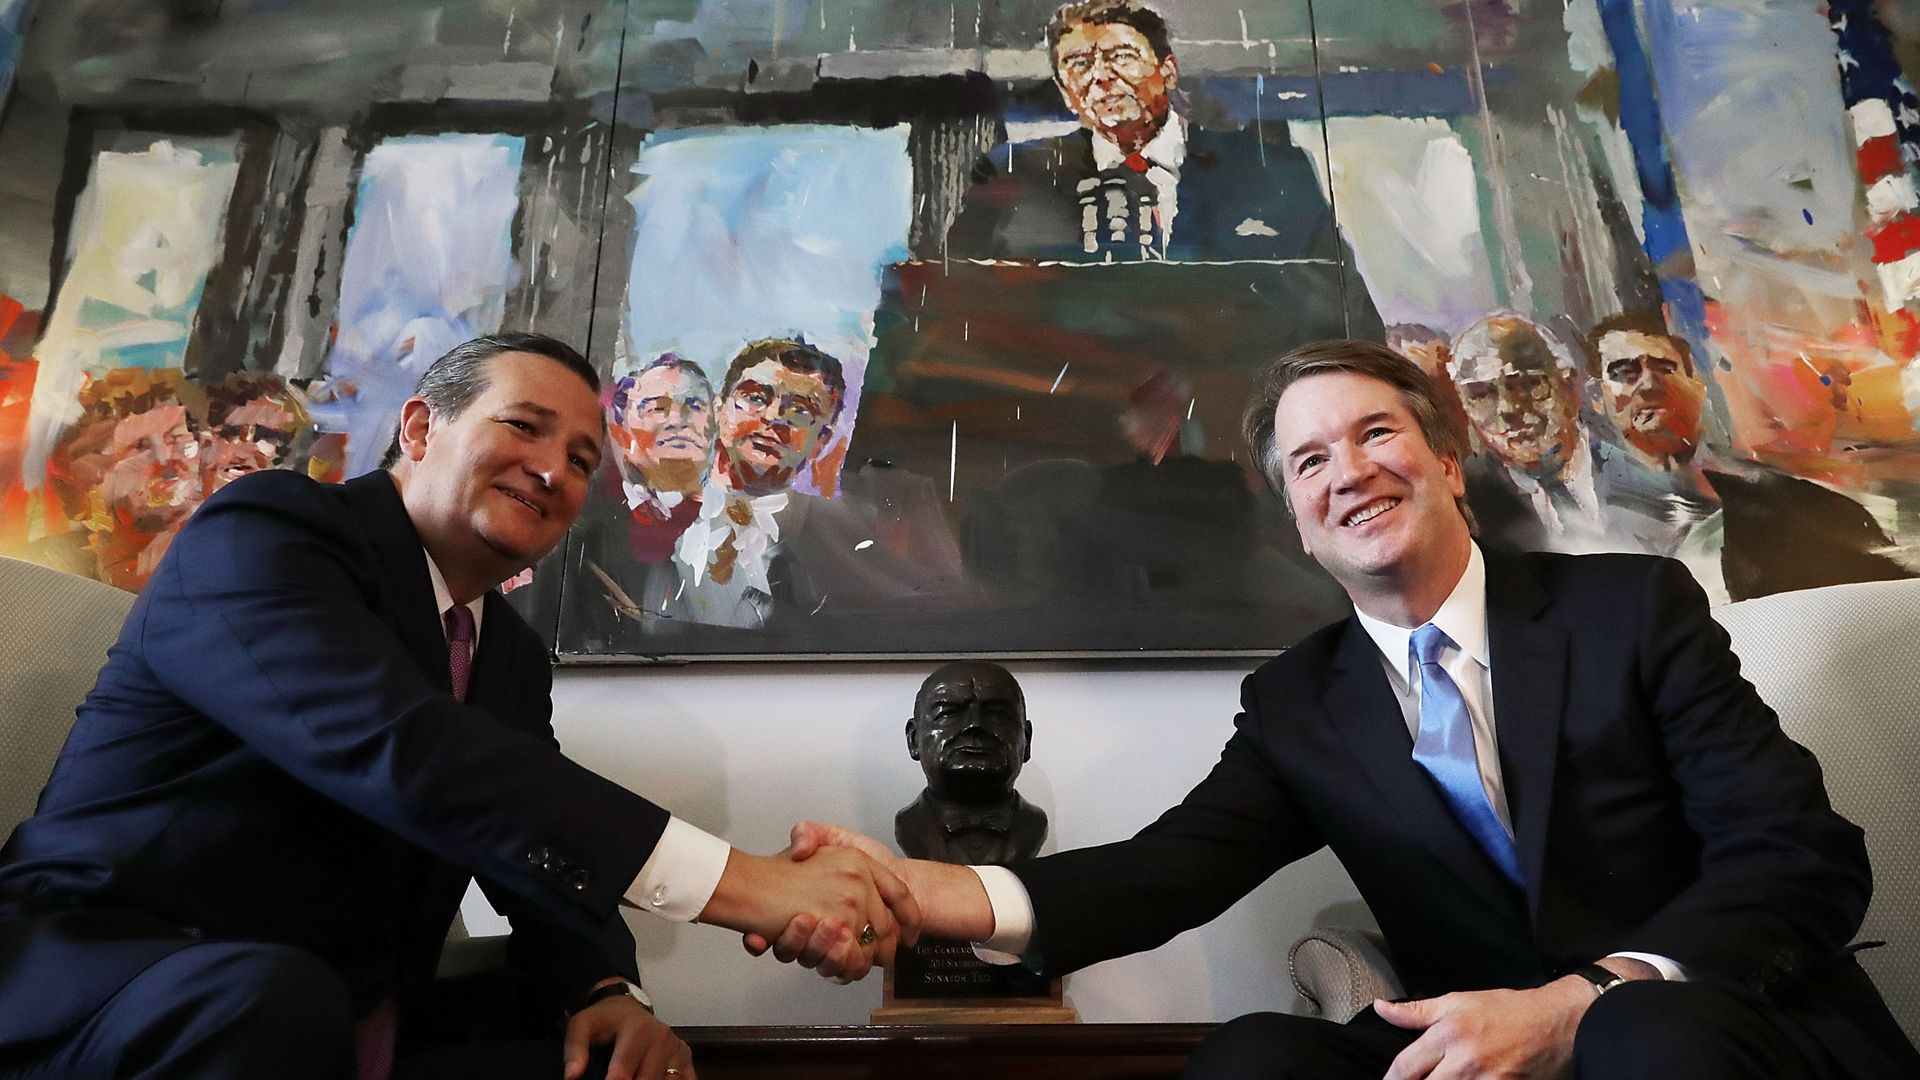 Ted Cruz and Brett Kavanaugh shaking hands in Cruz's office.